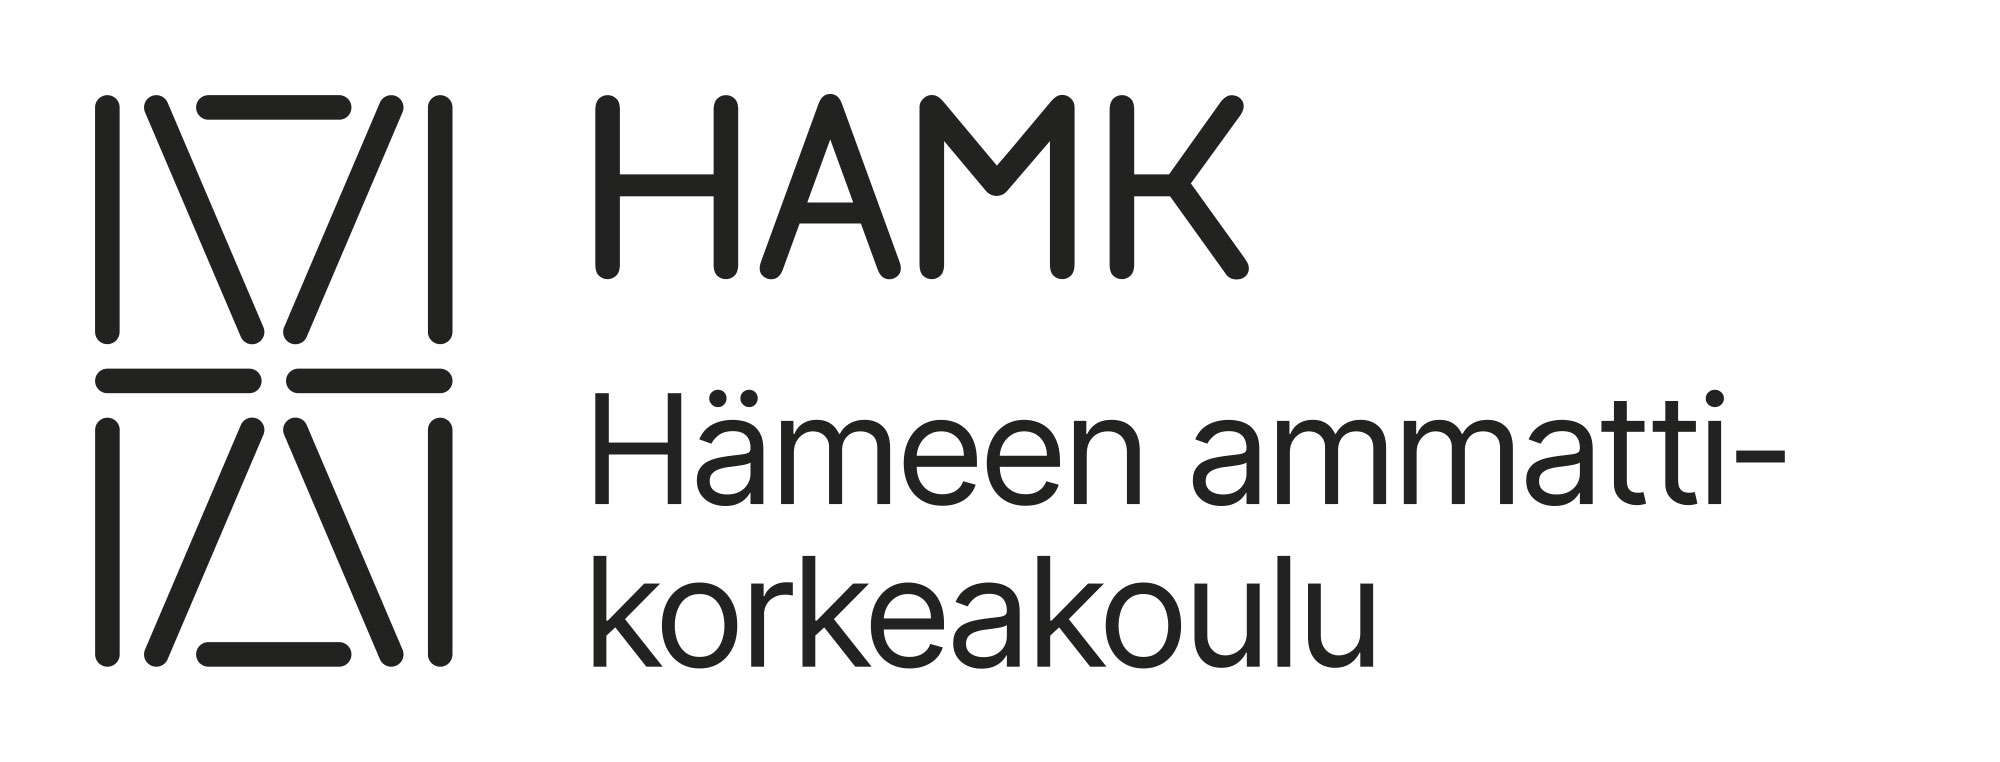 hamk_logo_text_large_fin.jpg